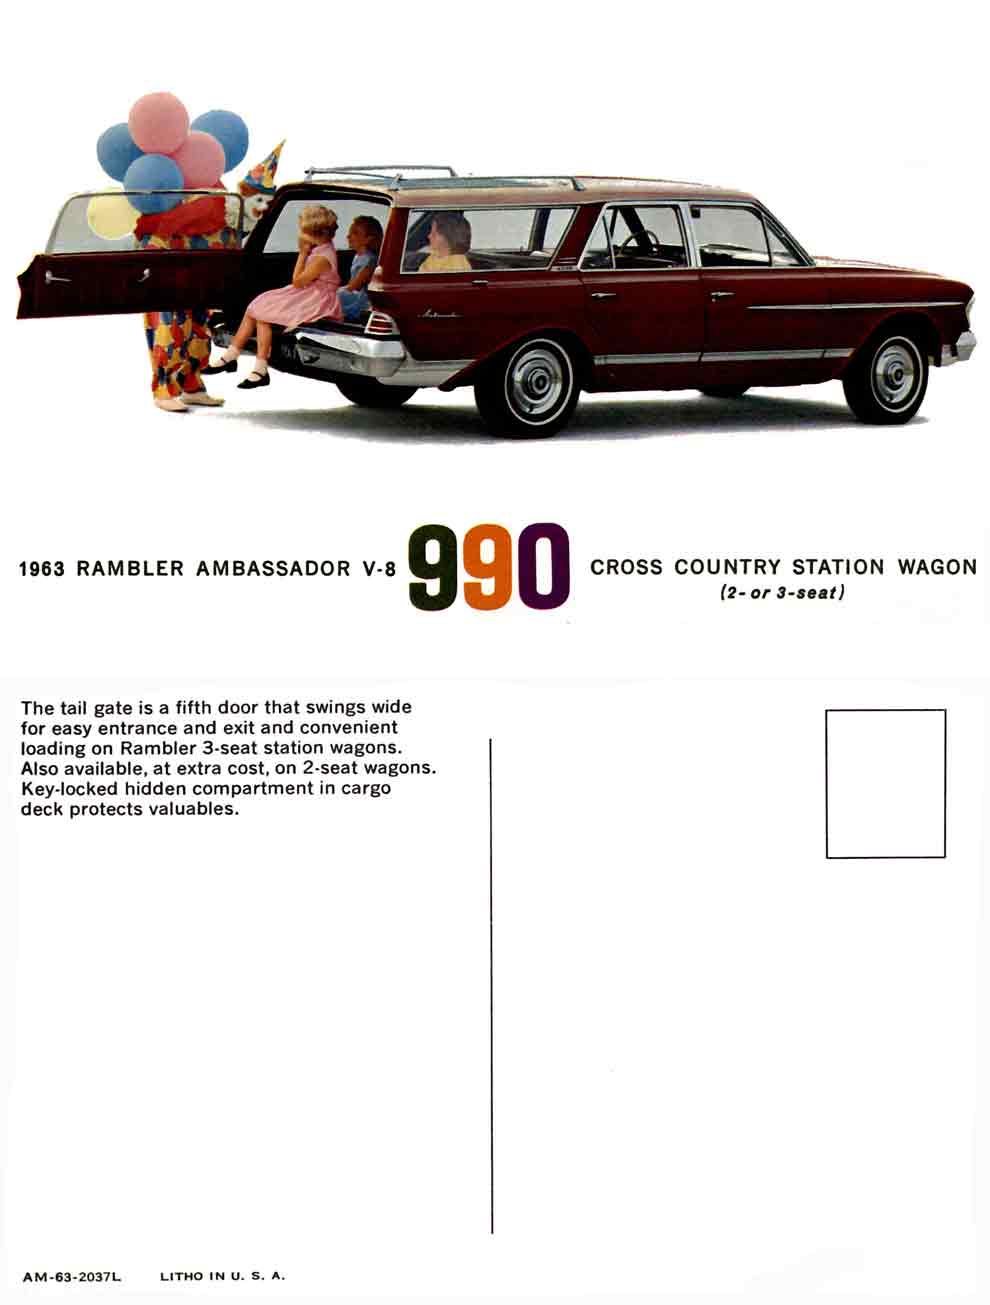 Rambler 1963 Ambassador V8 990 - Cross Country Station Wagon (Post Card Image)